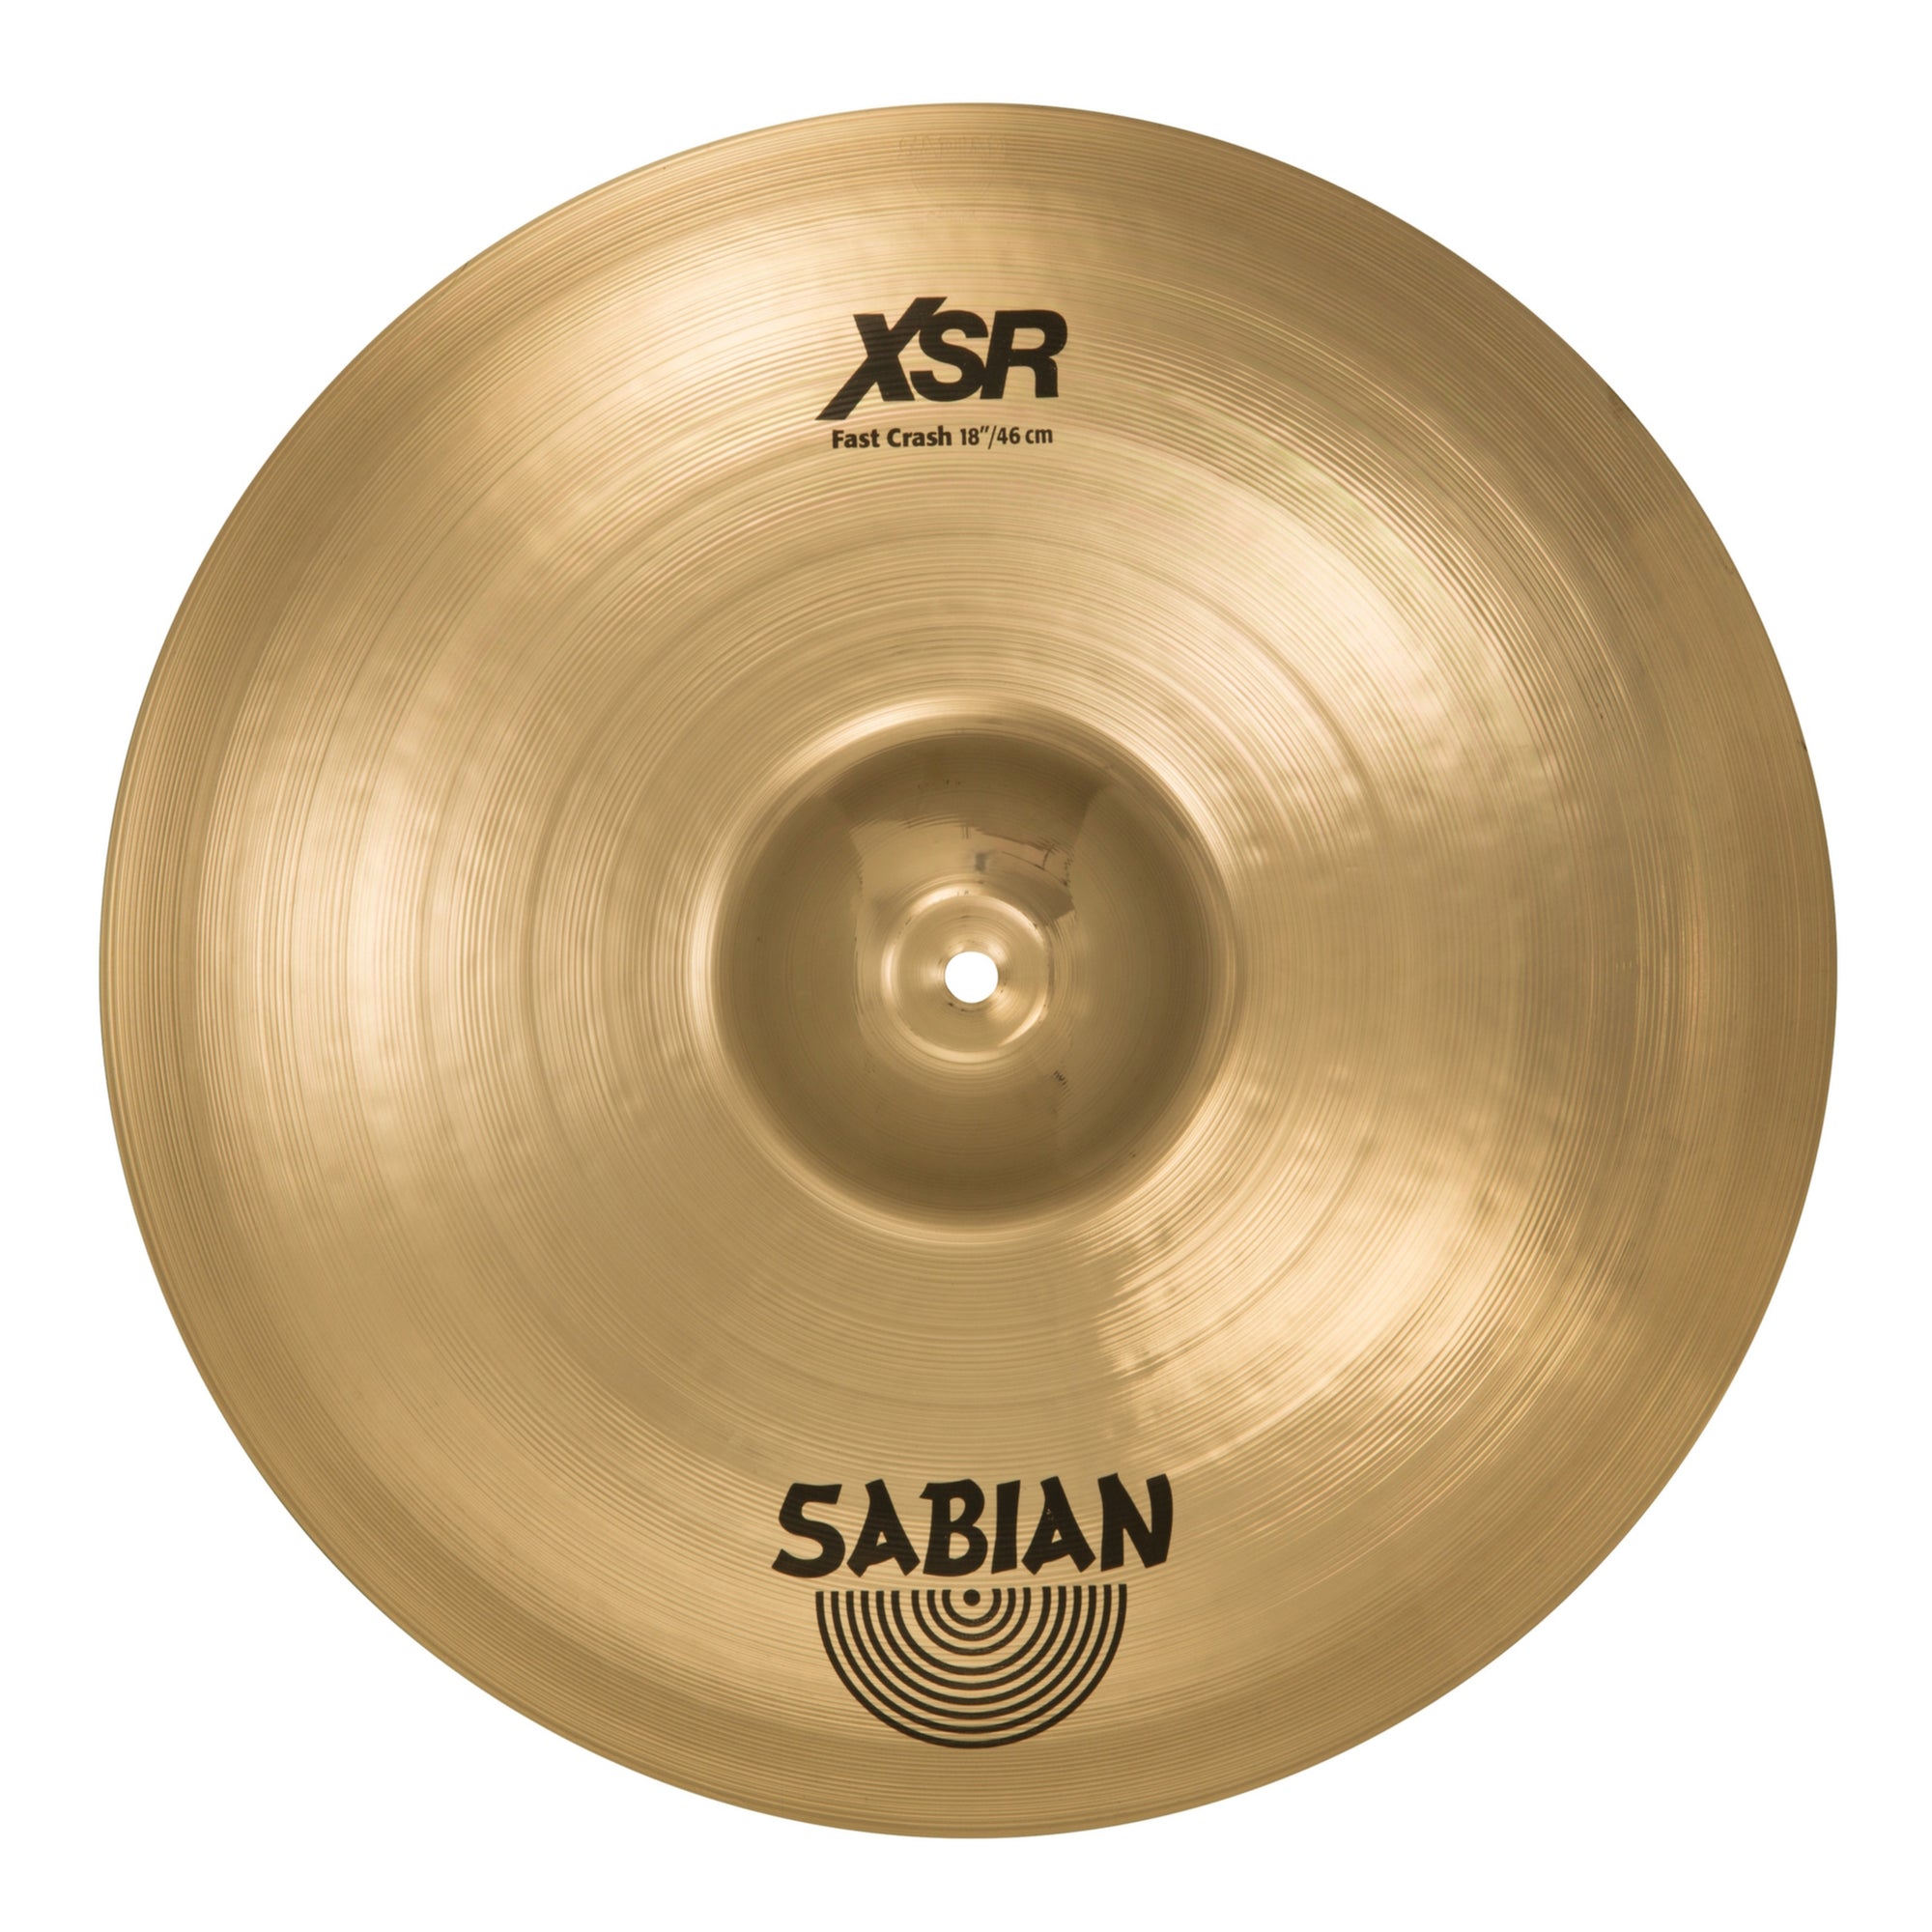 Sabian 18" XSR Fast Crash Brilliant Cymbal XSR1807B